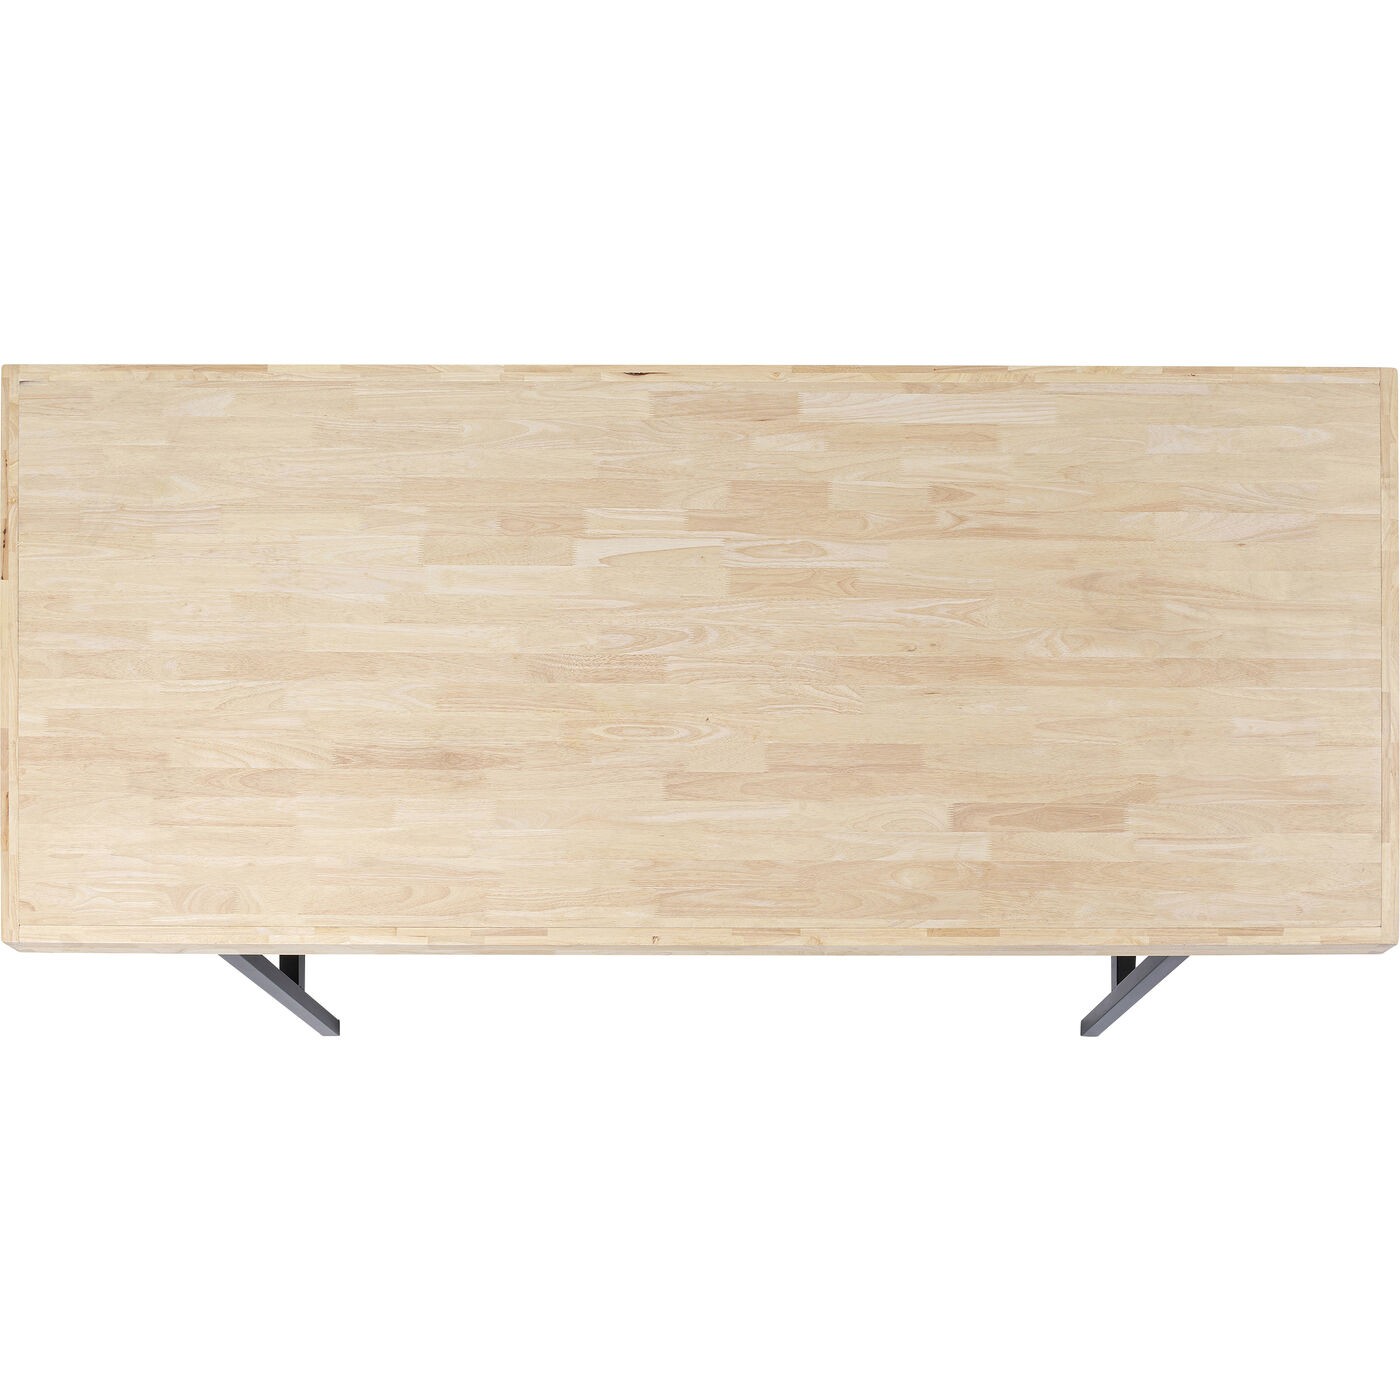 Table Copenhagen 160x80cm Kare Design